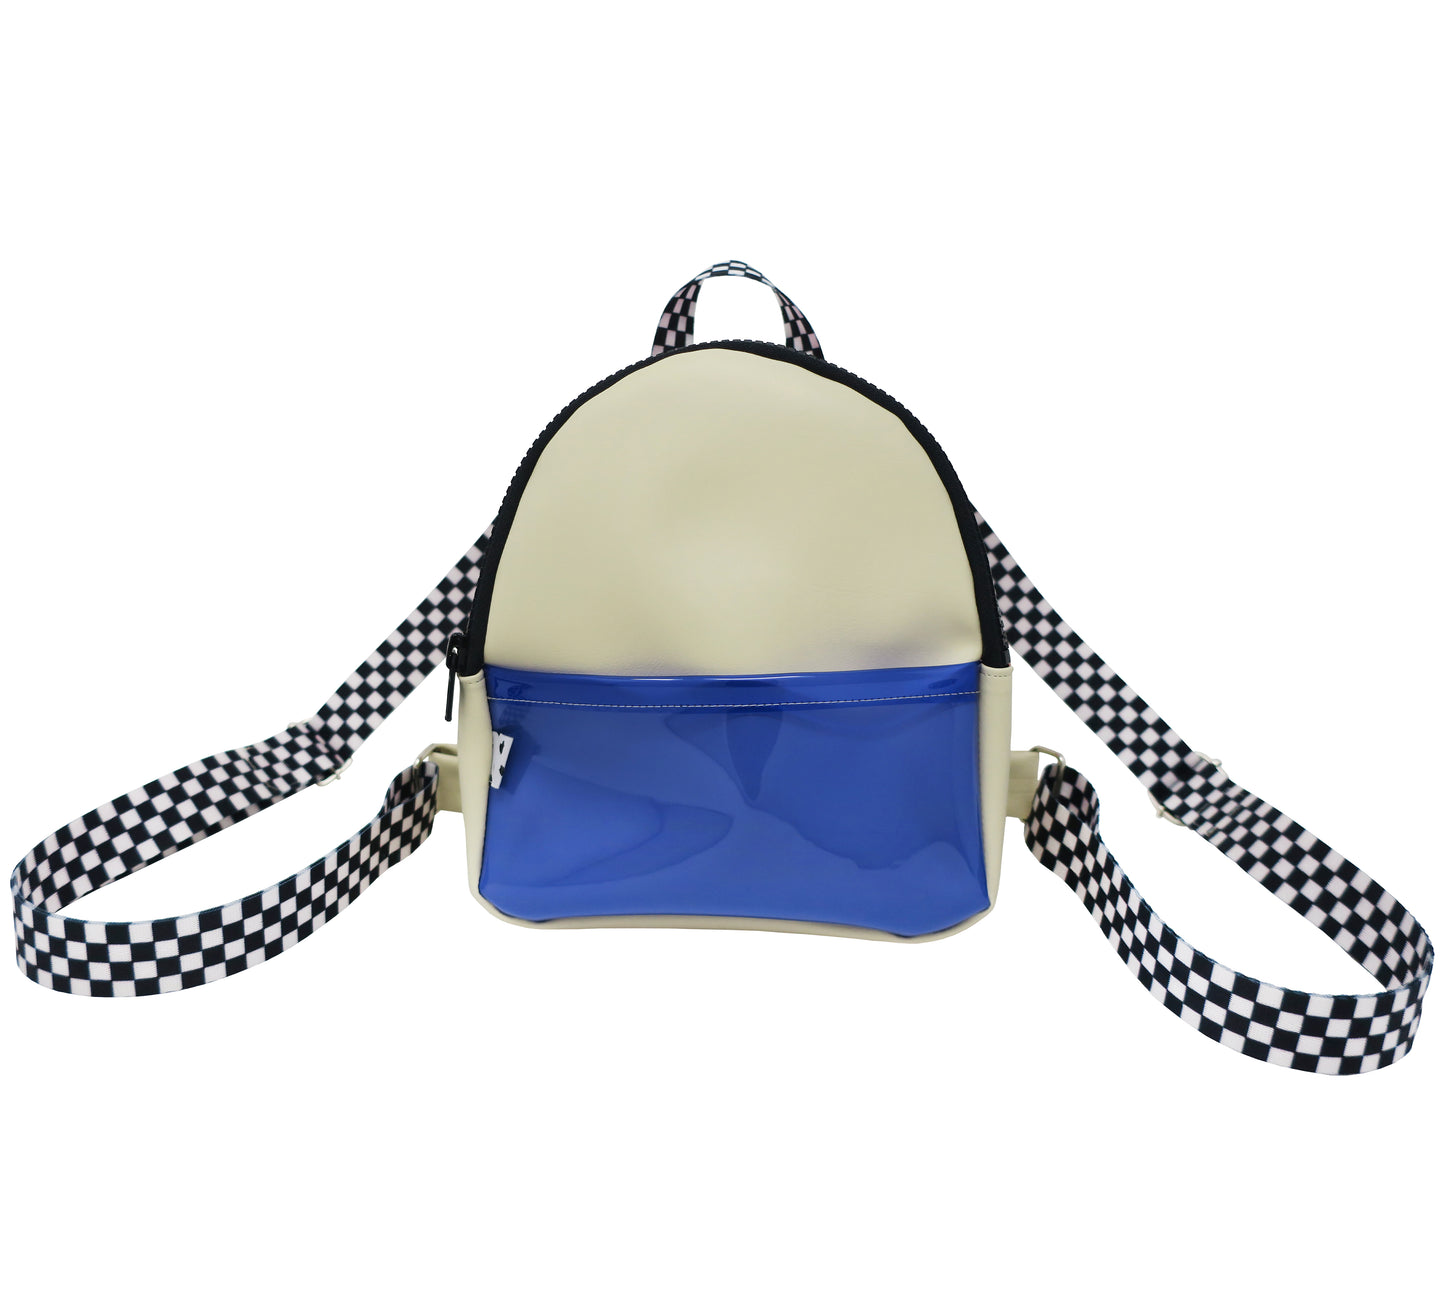 Cream + Navy Blue + Pink Mini Backpack